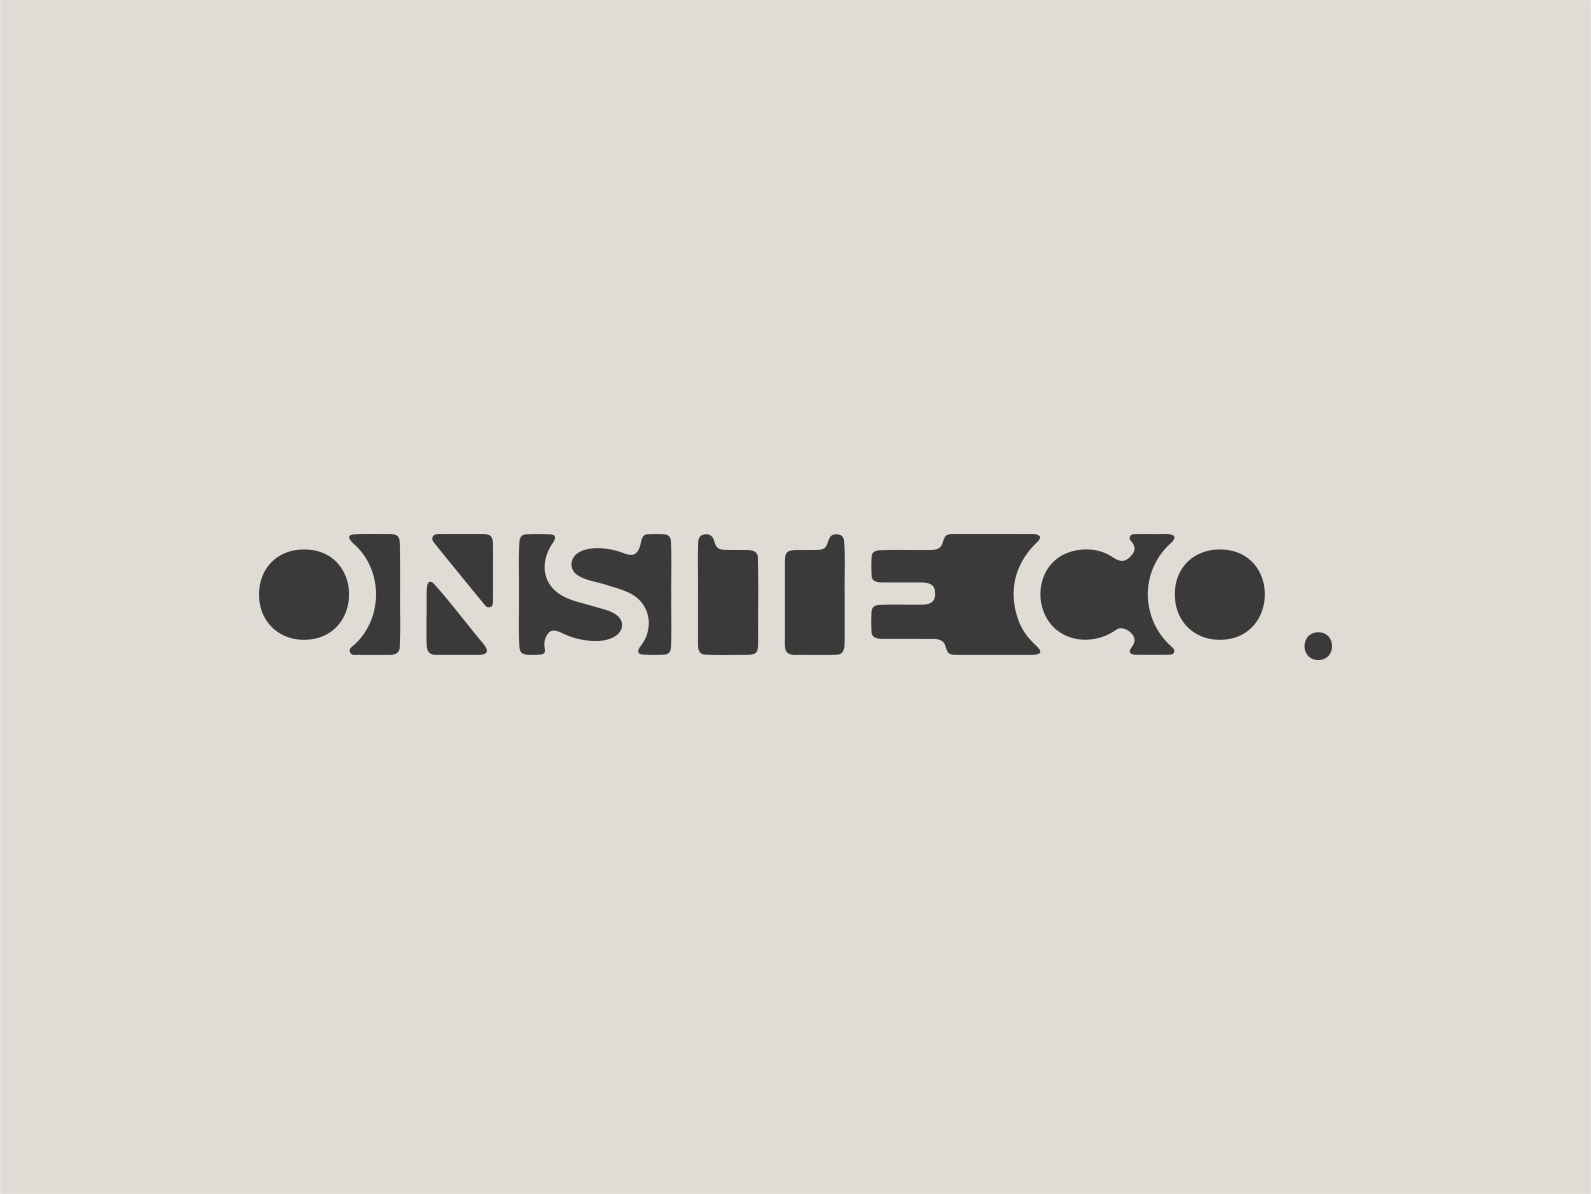 OnSite Co. Negative Space Logo by Drew Tirado on Dribbble